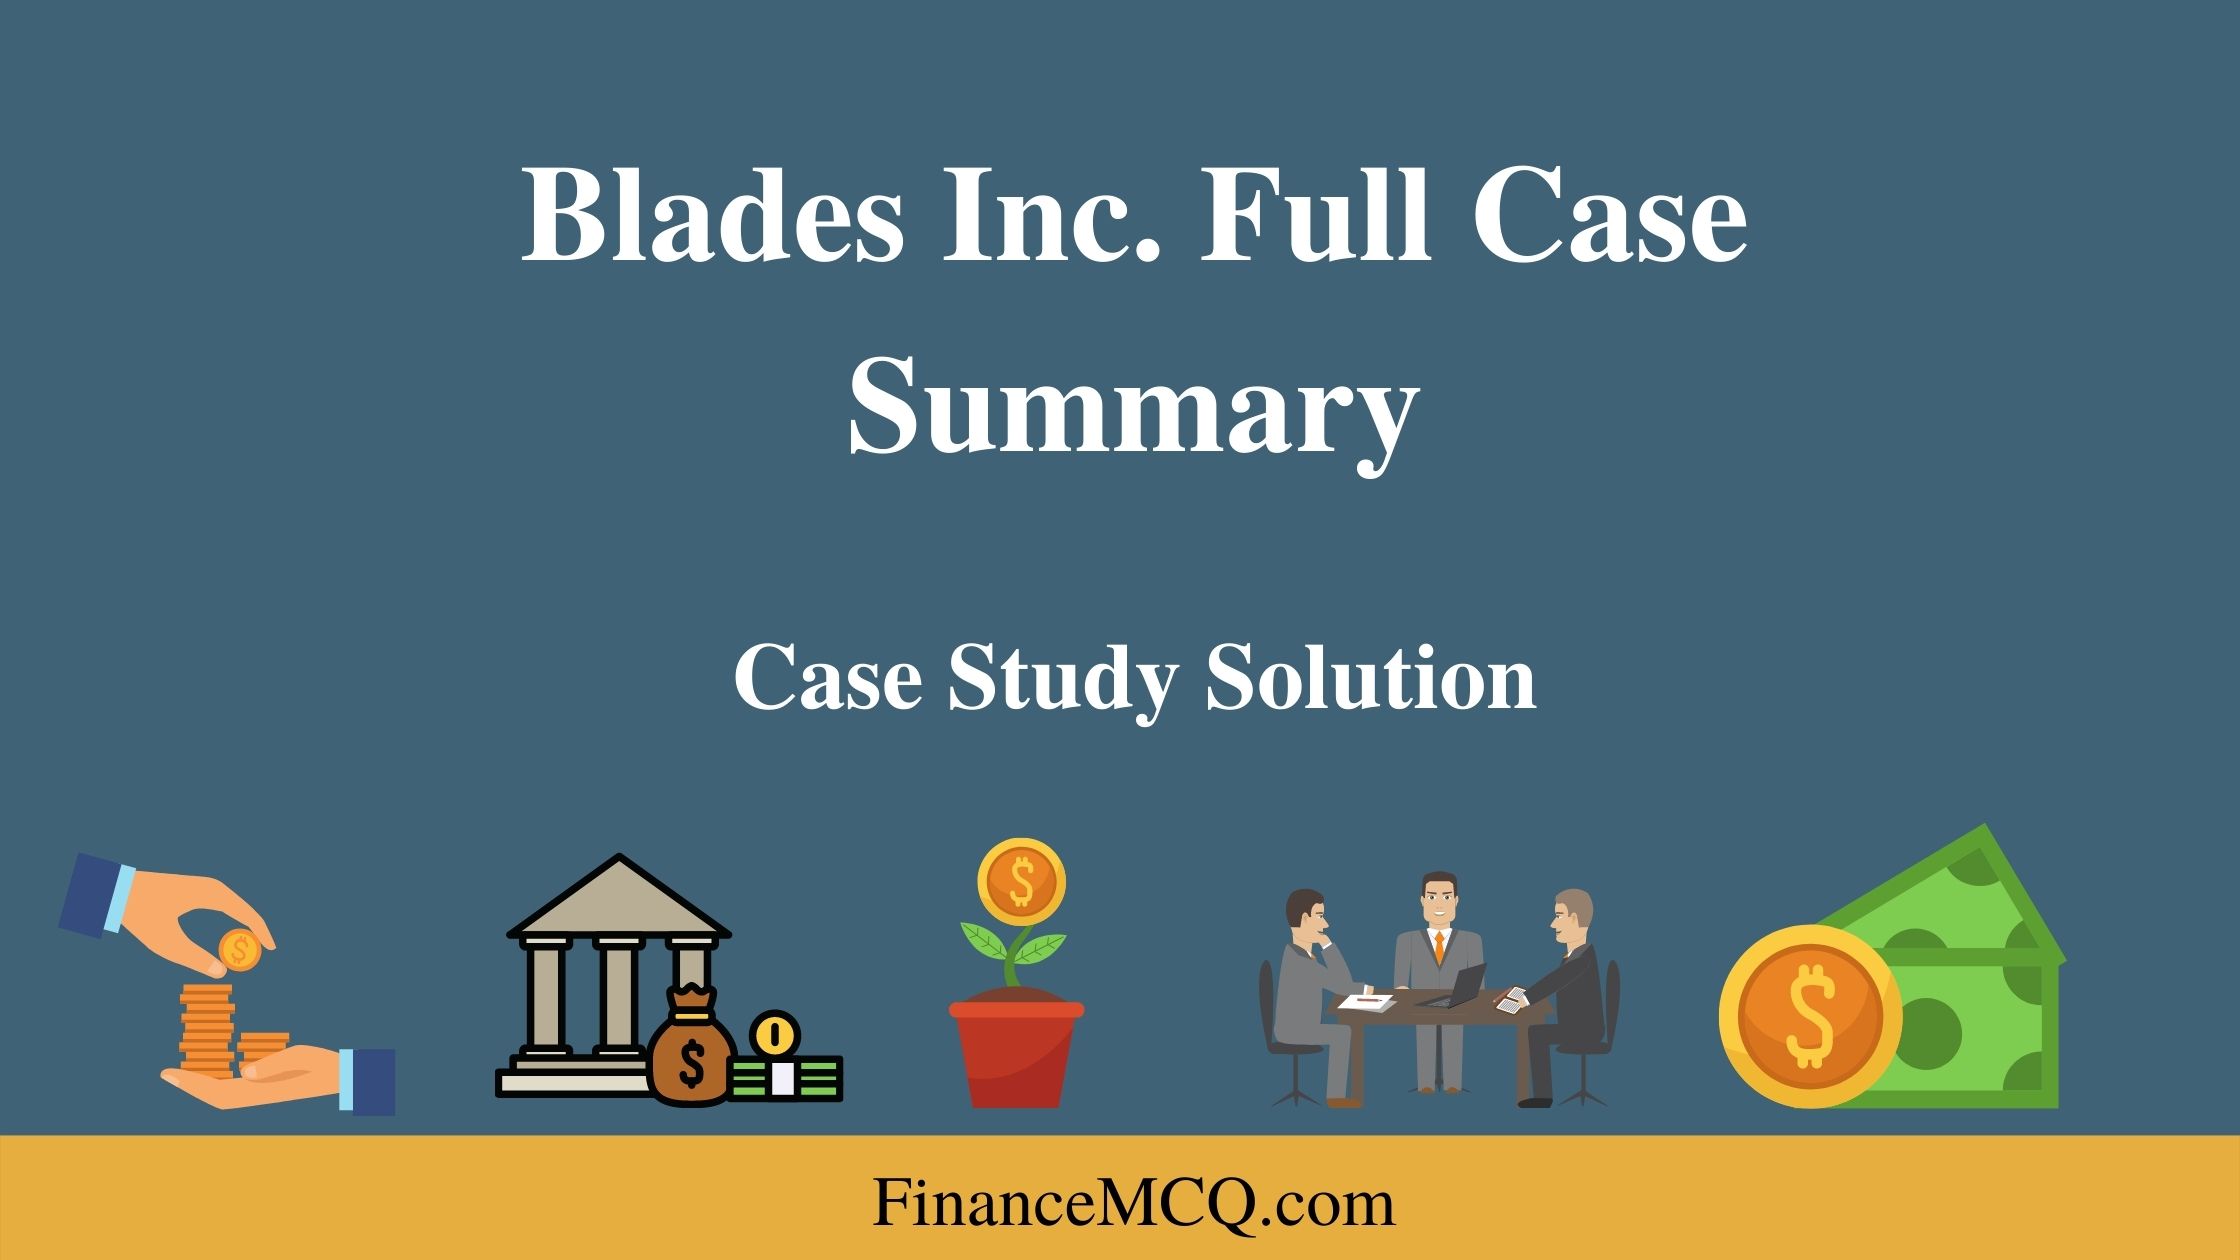 Blades Inc. Full Case Summary